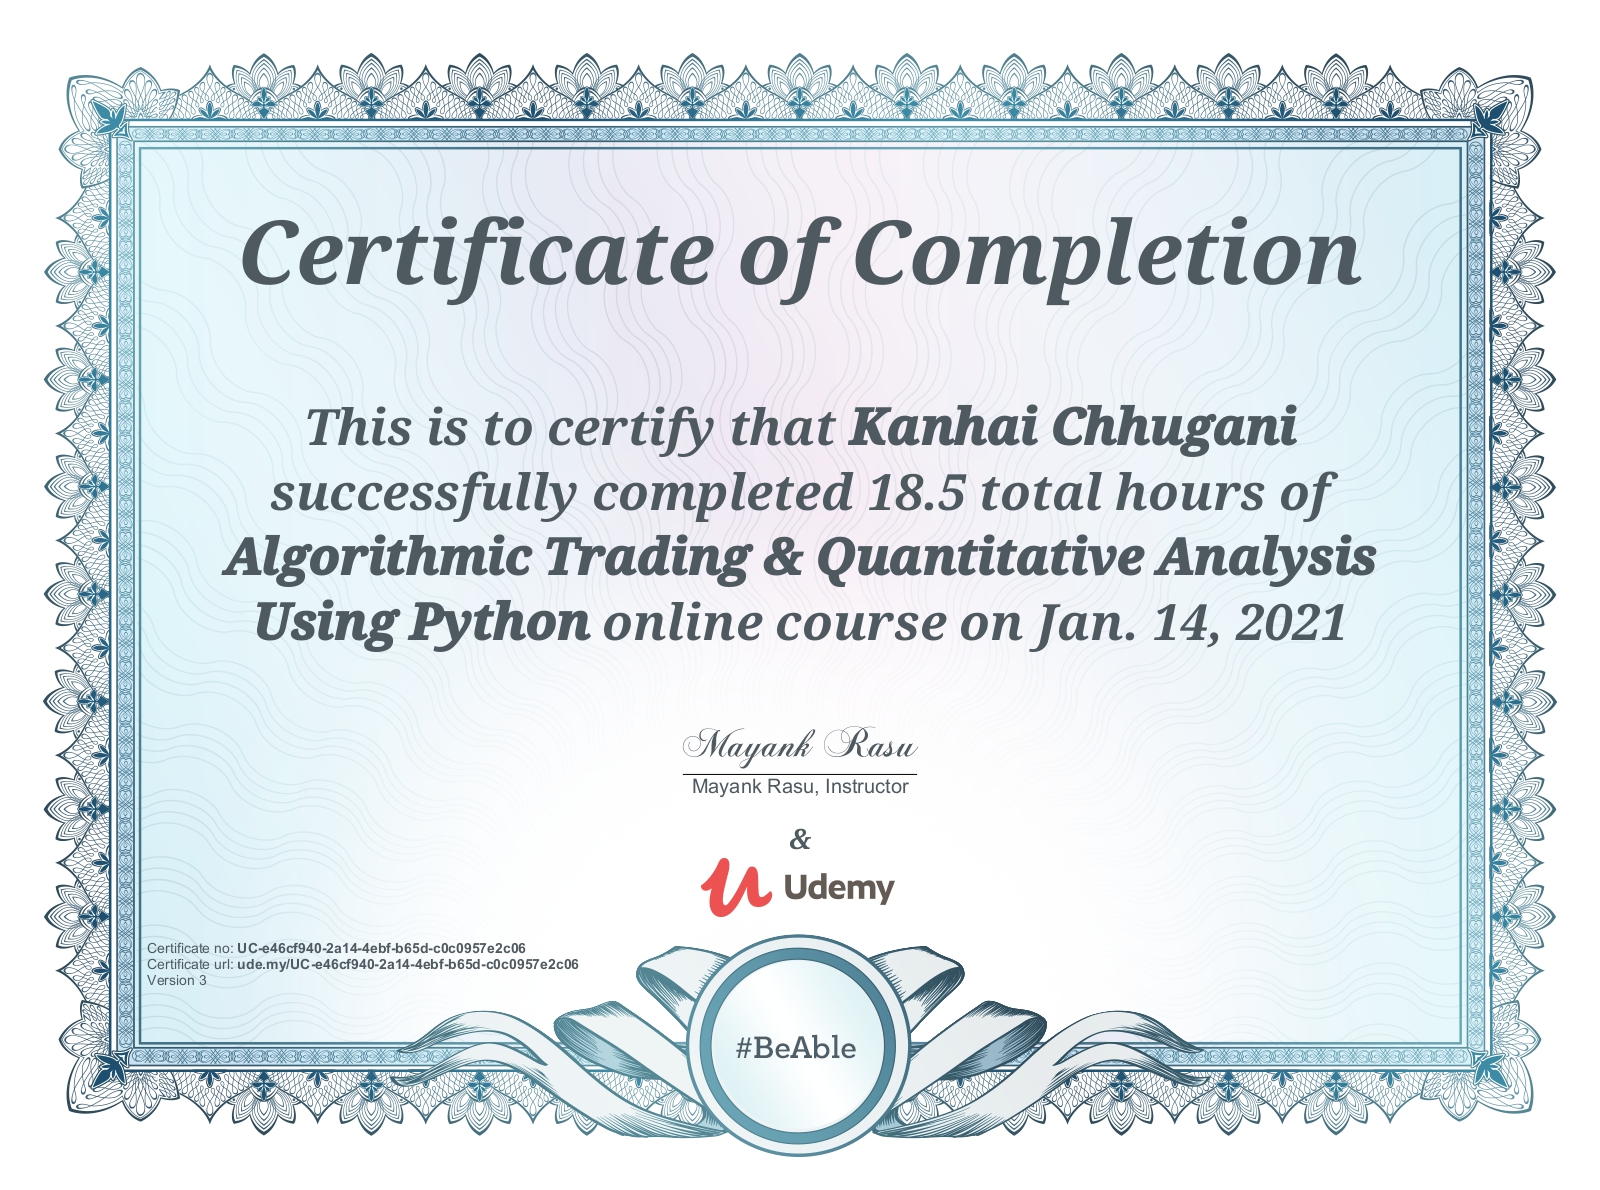 Udemy Certificate for Algorithmic Trading & Quantitative Analysis Using Python